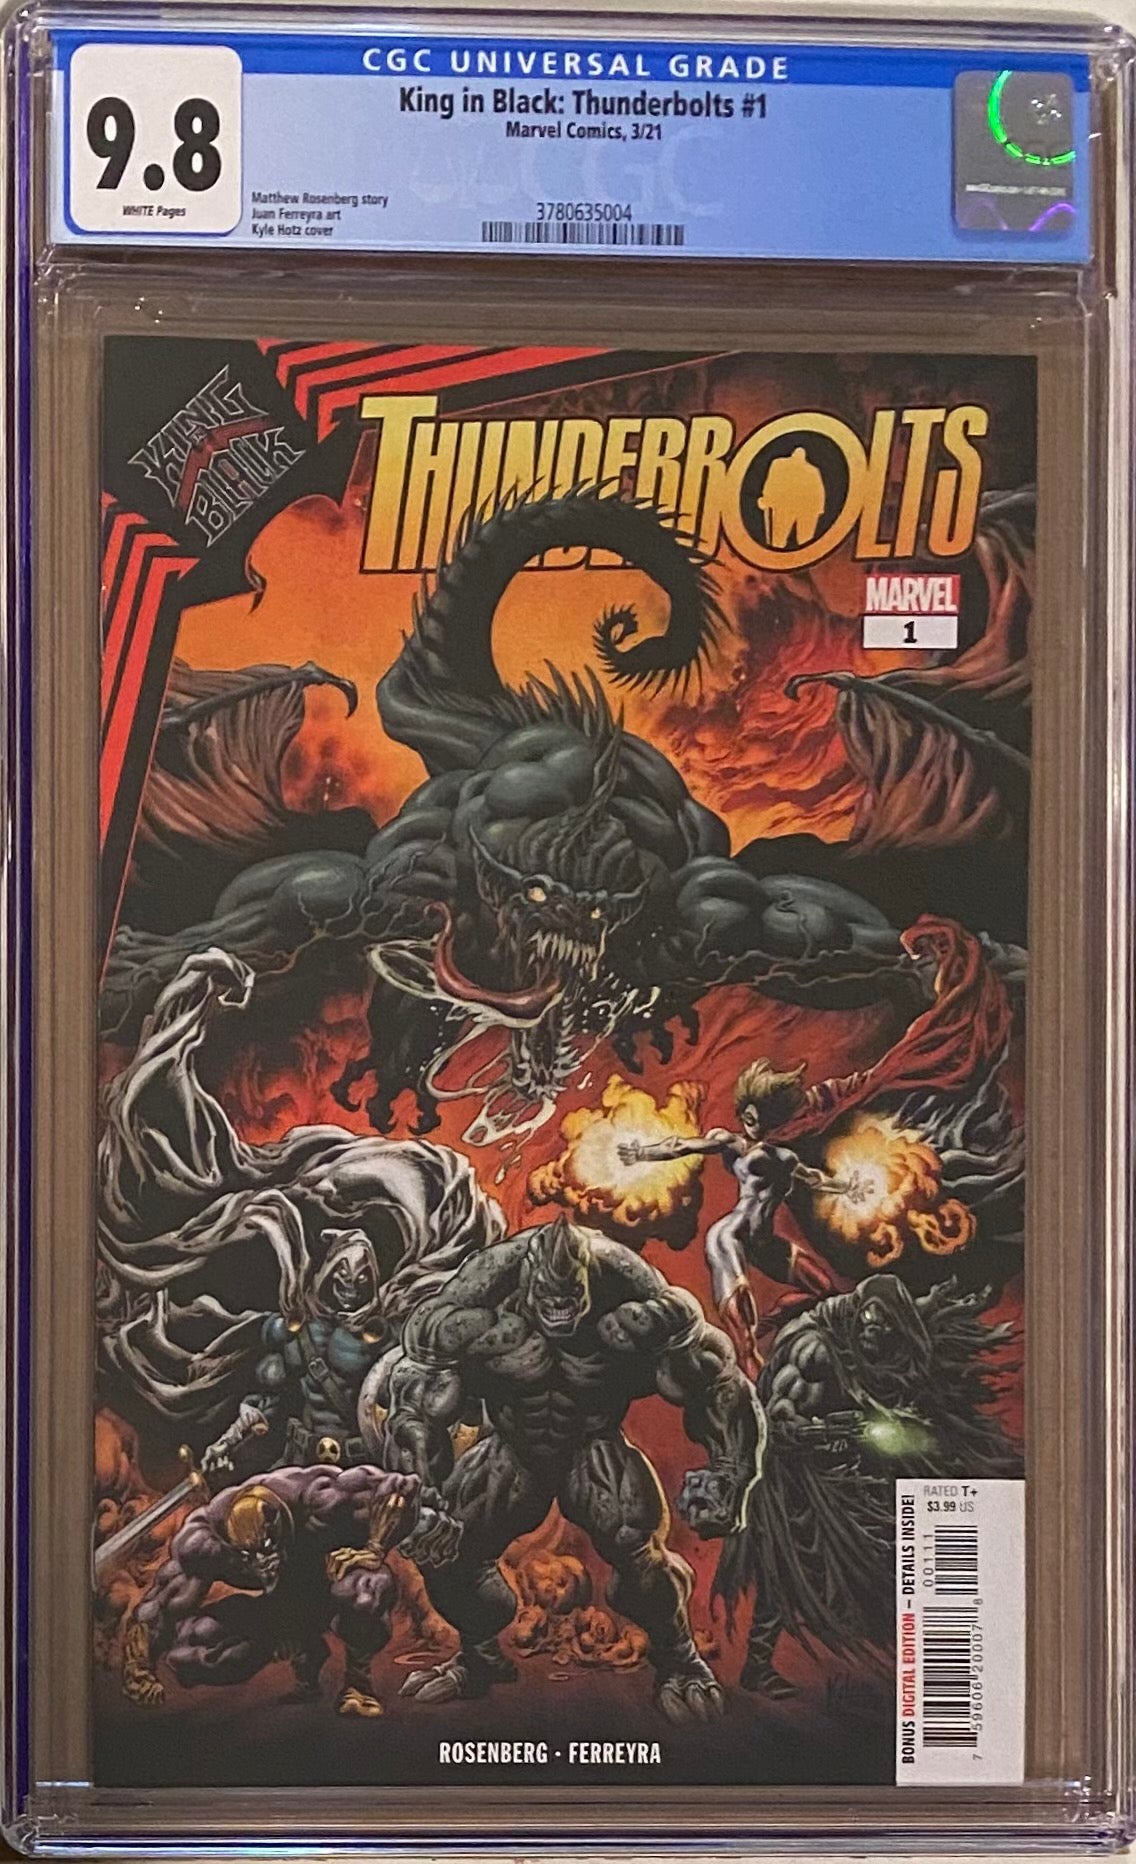 King in Black: Thunderbolts #1 CGC 9.8